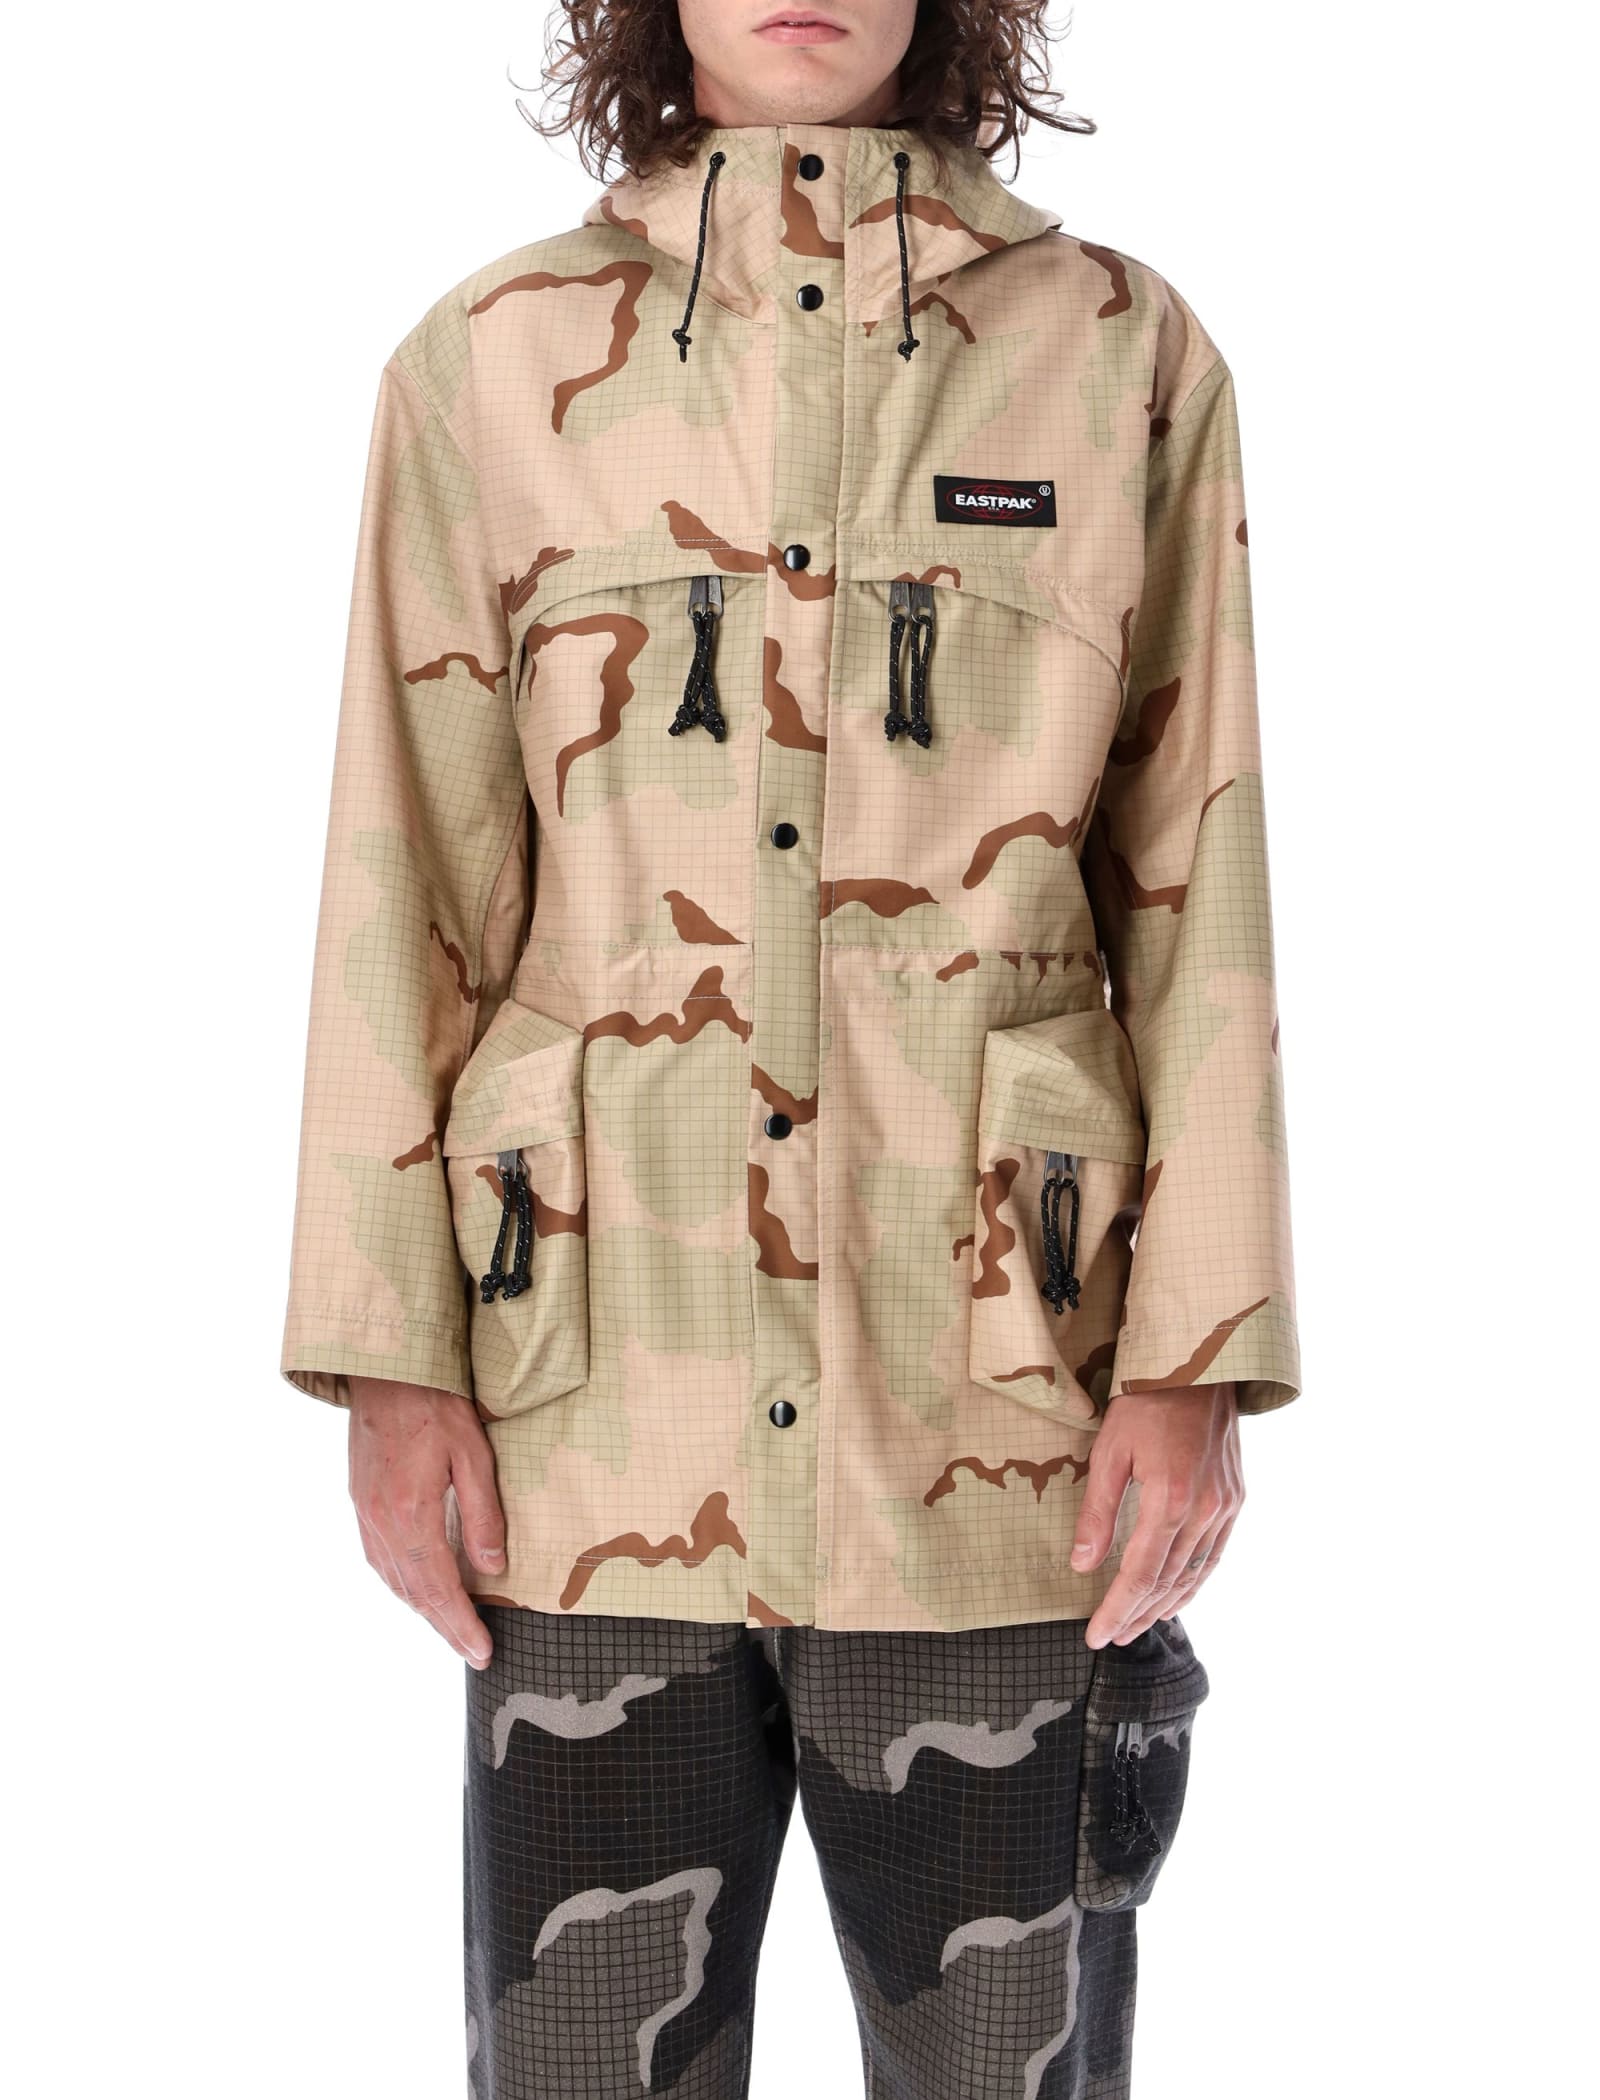 Undercover Jun Takahashi Camouflage Print Jacket